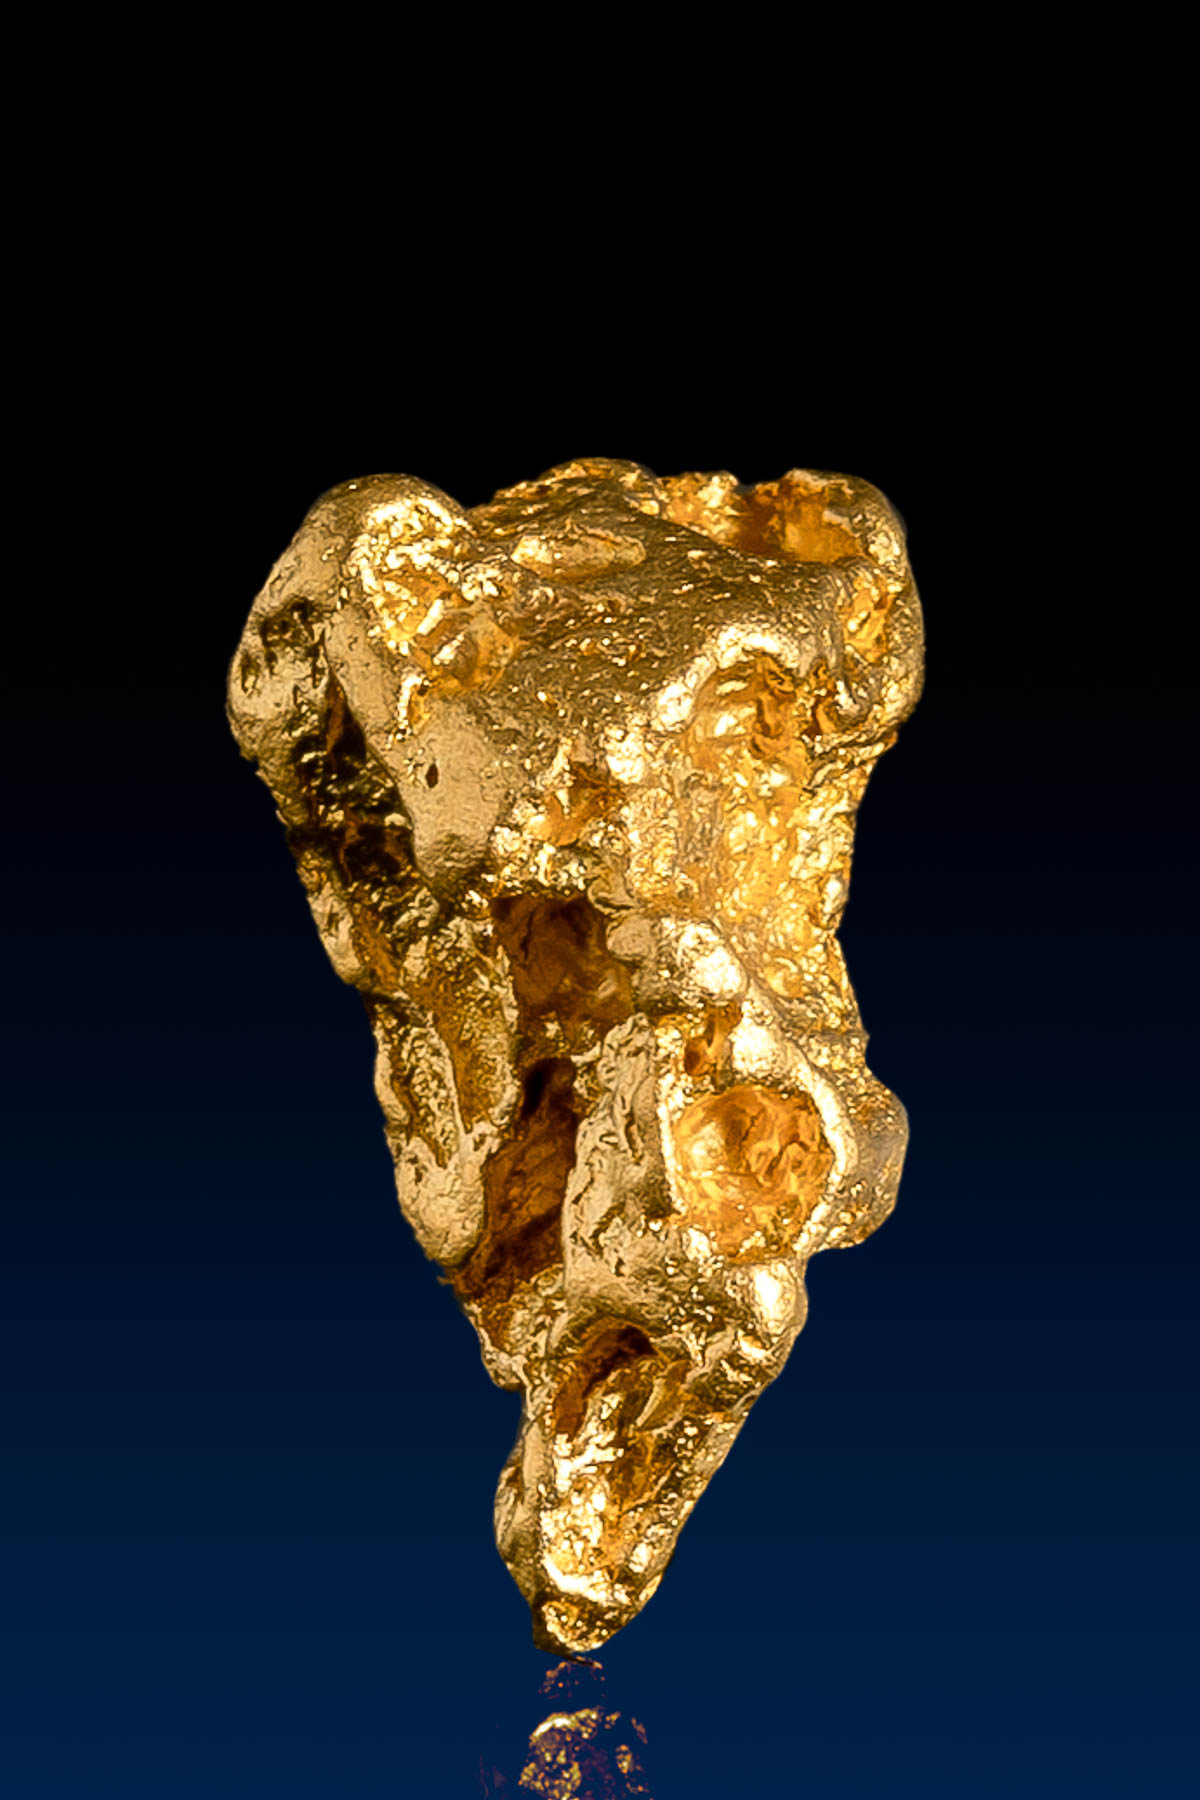 Tall Rugged Natural Australian Gold Nugget - 4.99 grams